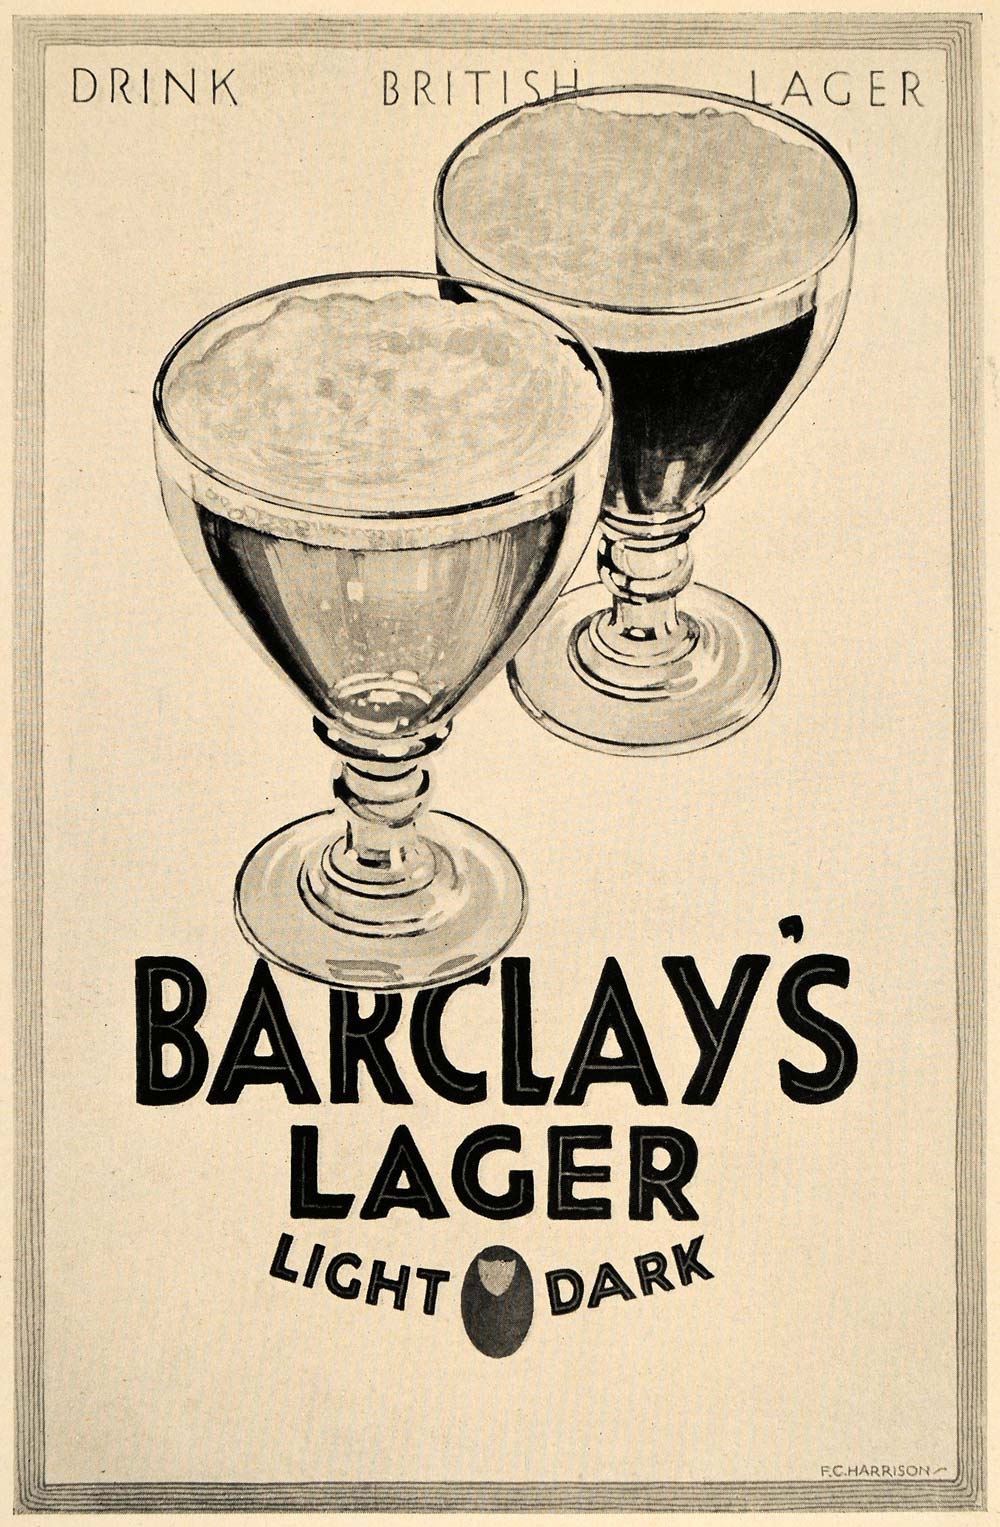 1926 Barclay's Lager Light Dark Beer F C Harrison Print ORIGINAL HISTORIC POS8A